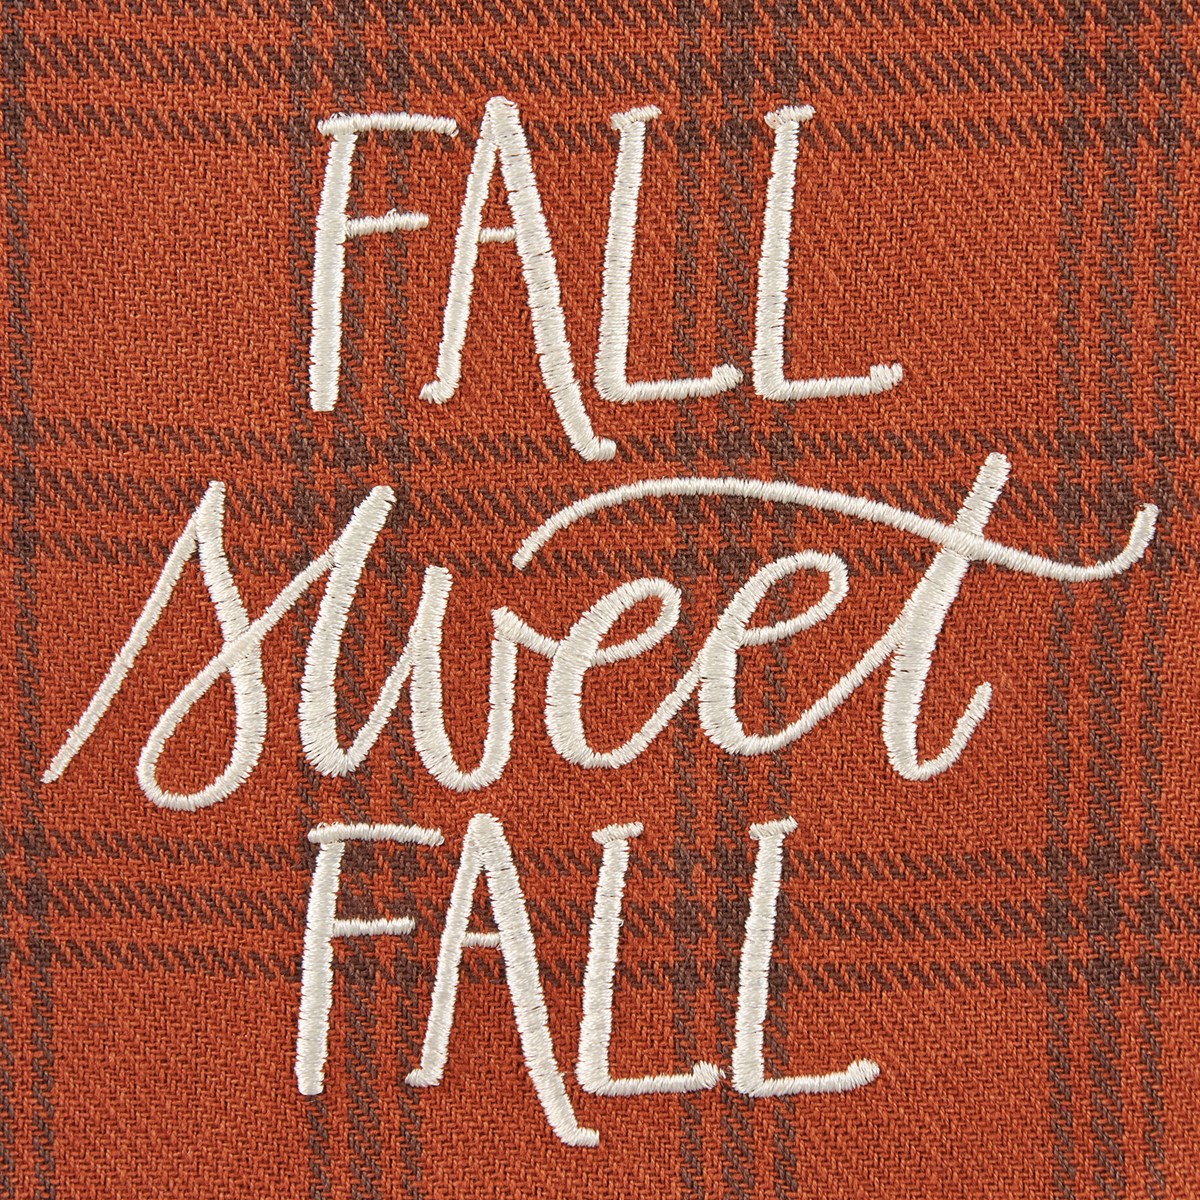 Fall Sweet Fall Plaid Kitchen Towel - Cotton